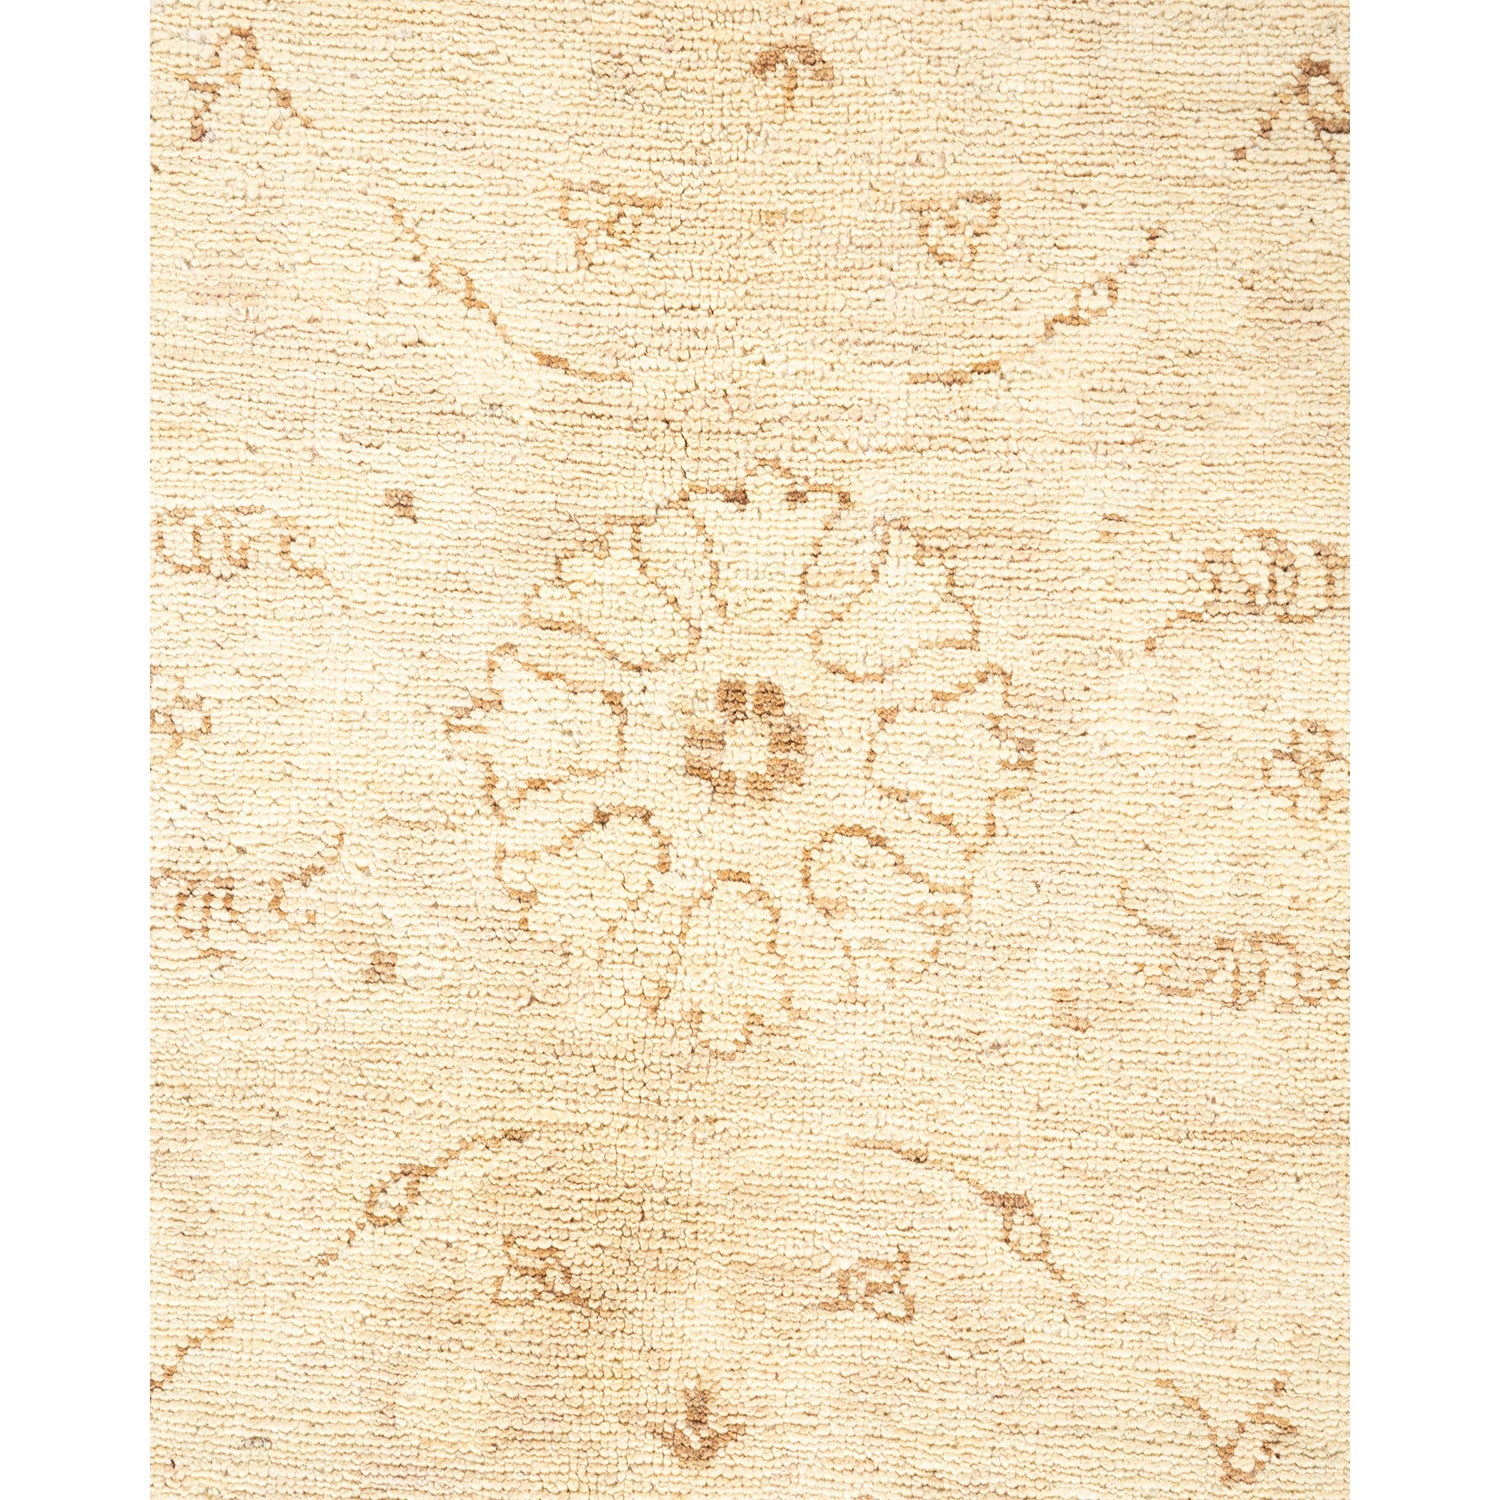 Elegant cream-colored rug with subtle floral and ornate design.